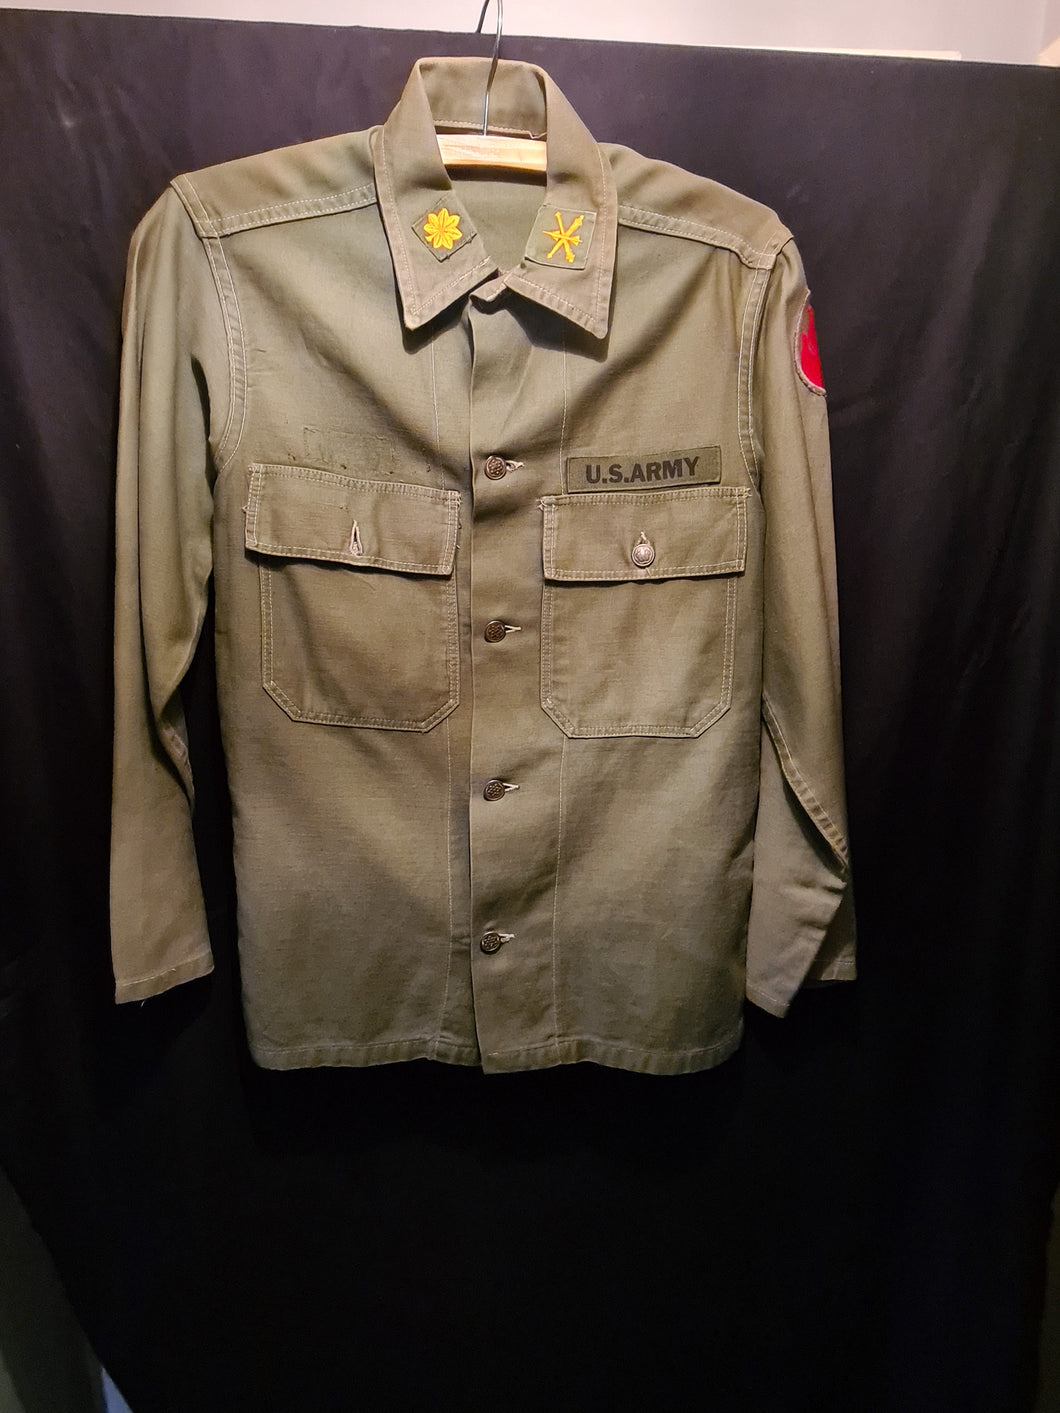 Vietnam war in -country 63rd infantry 1st pattern shirt